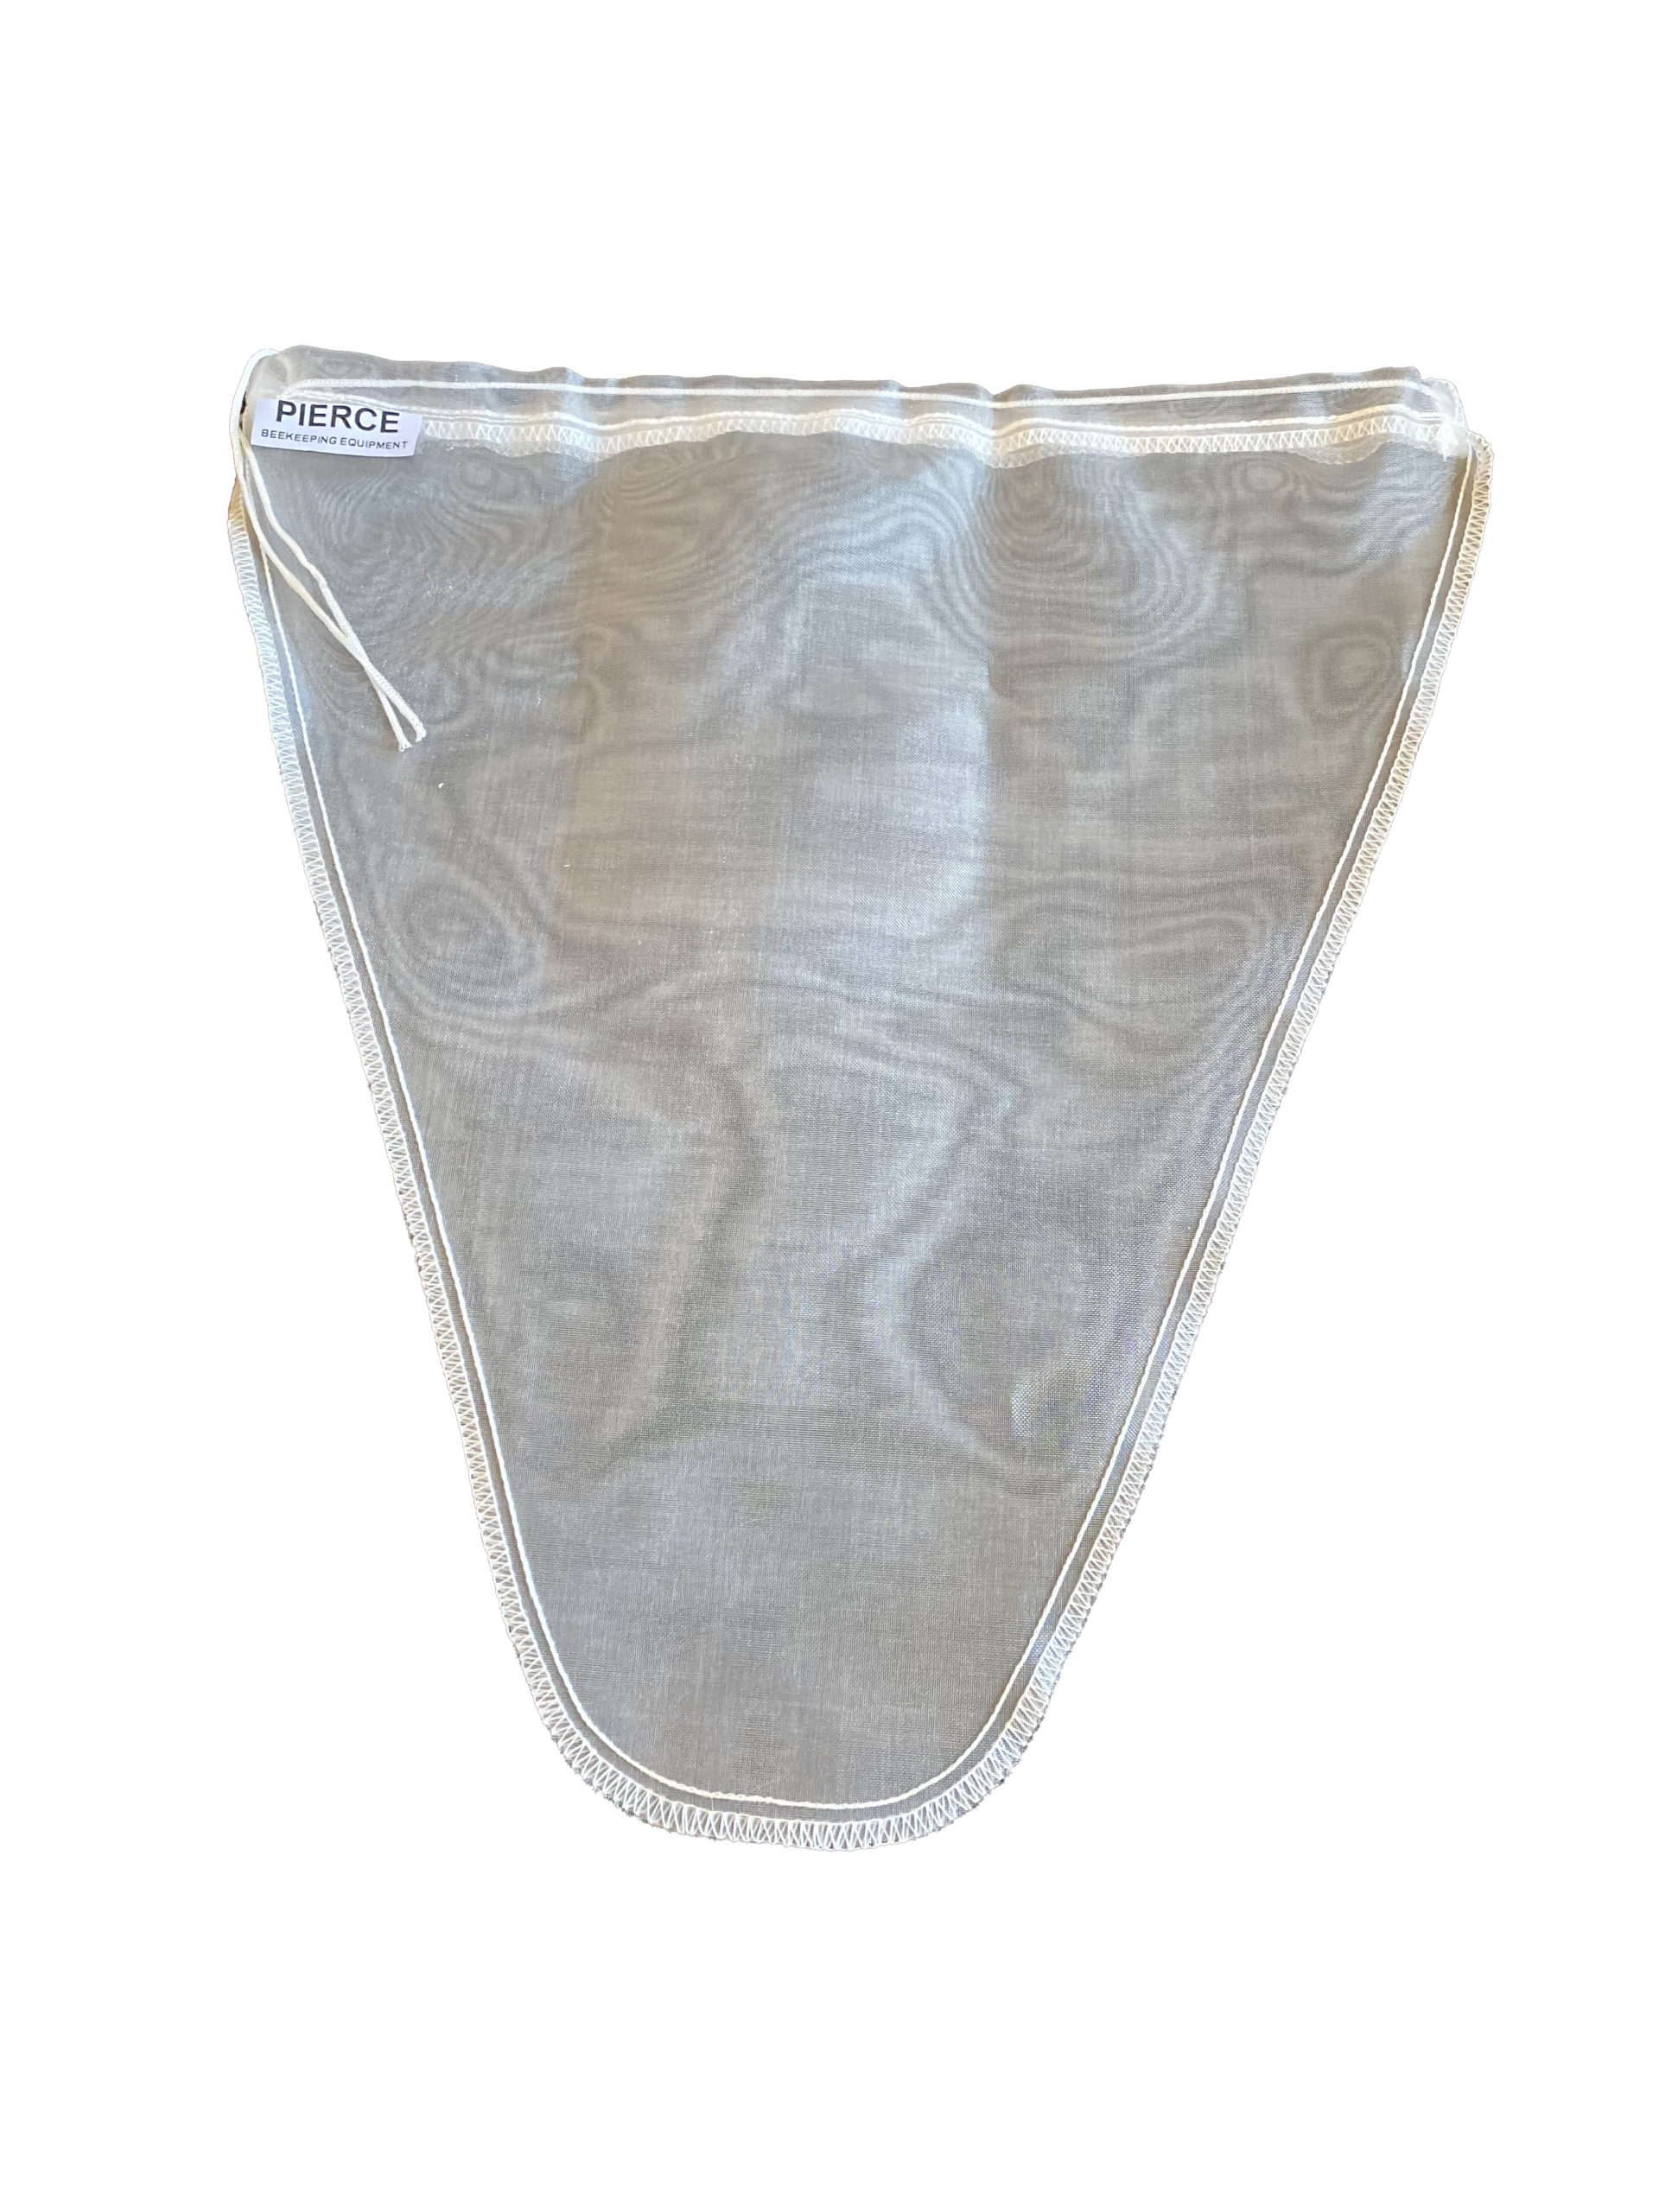 5 Gallon Filter Bag with draw string. Made of Food grade Nylon, Reusable  600 micron Mesh.